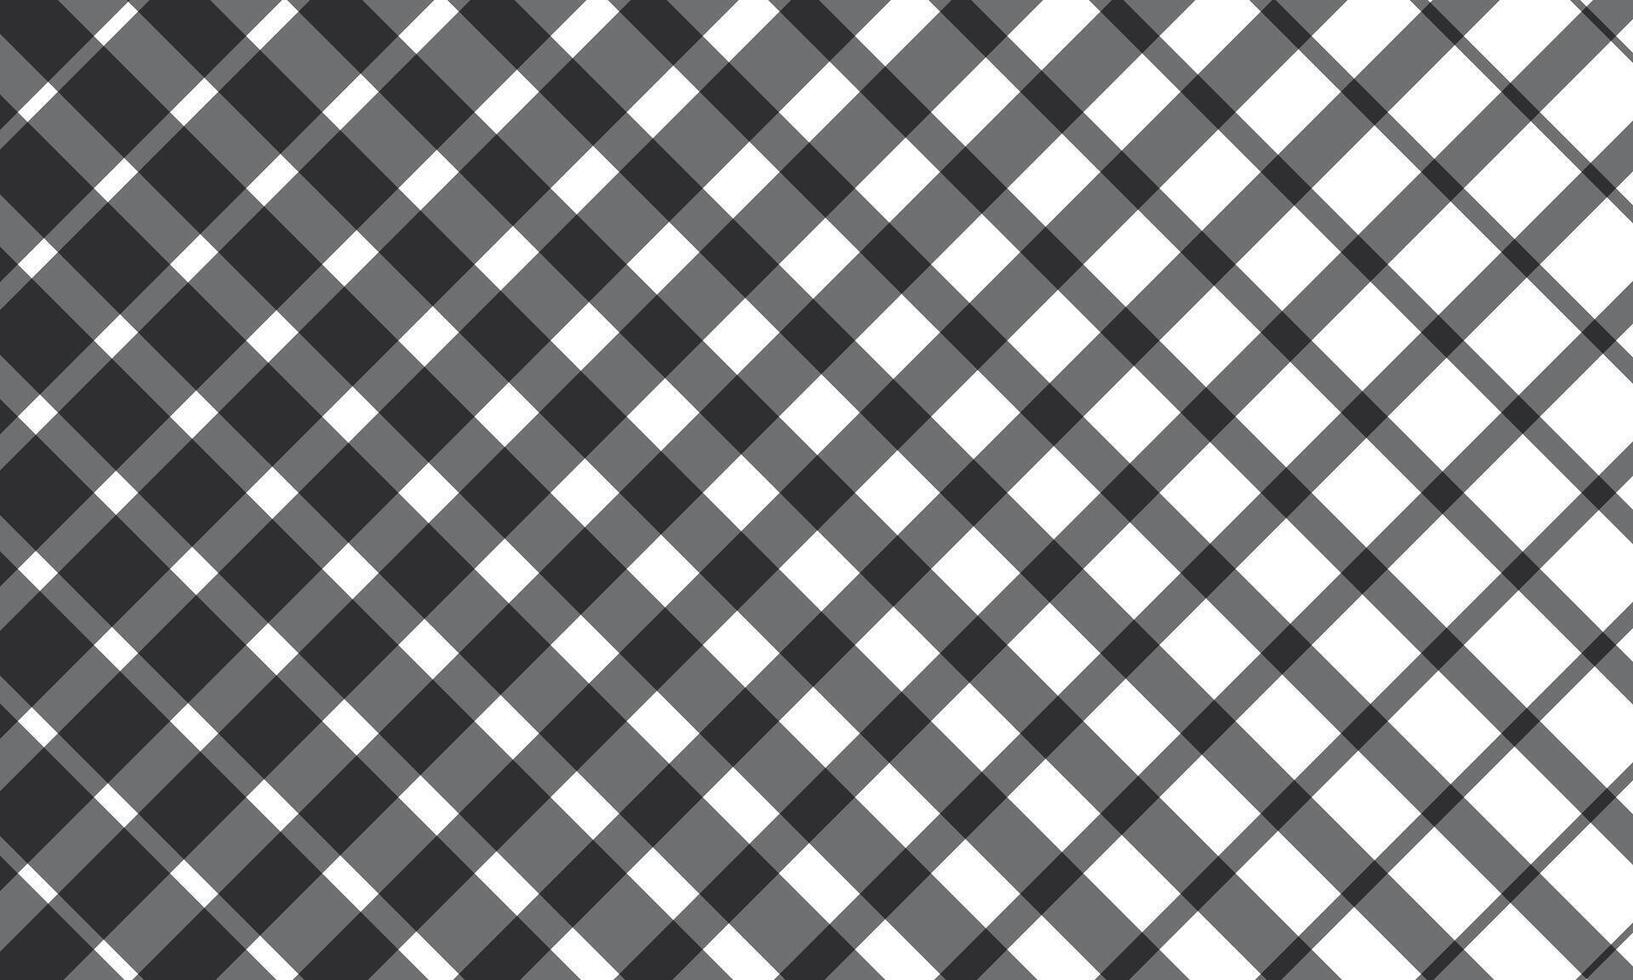 abstract geometric pattern vector illustration.